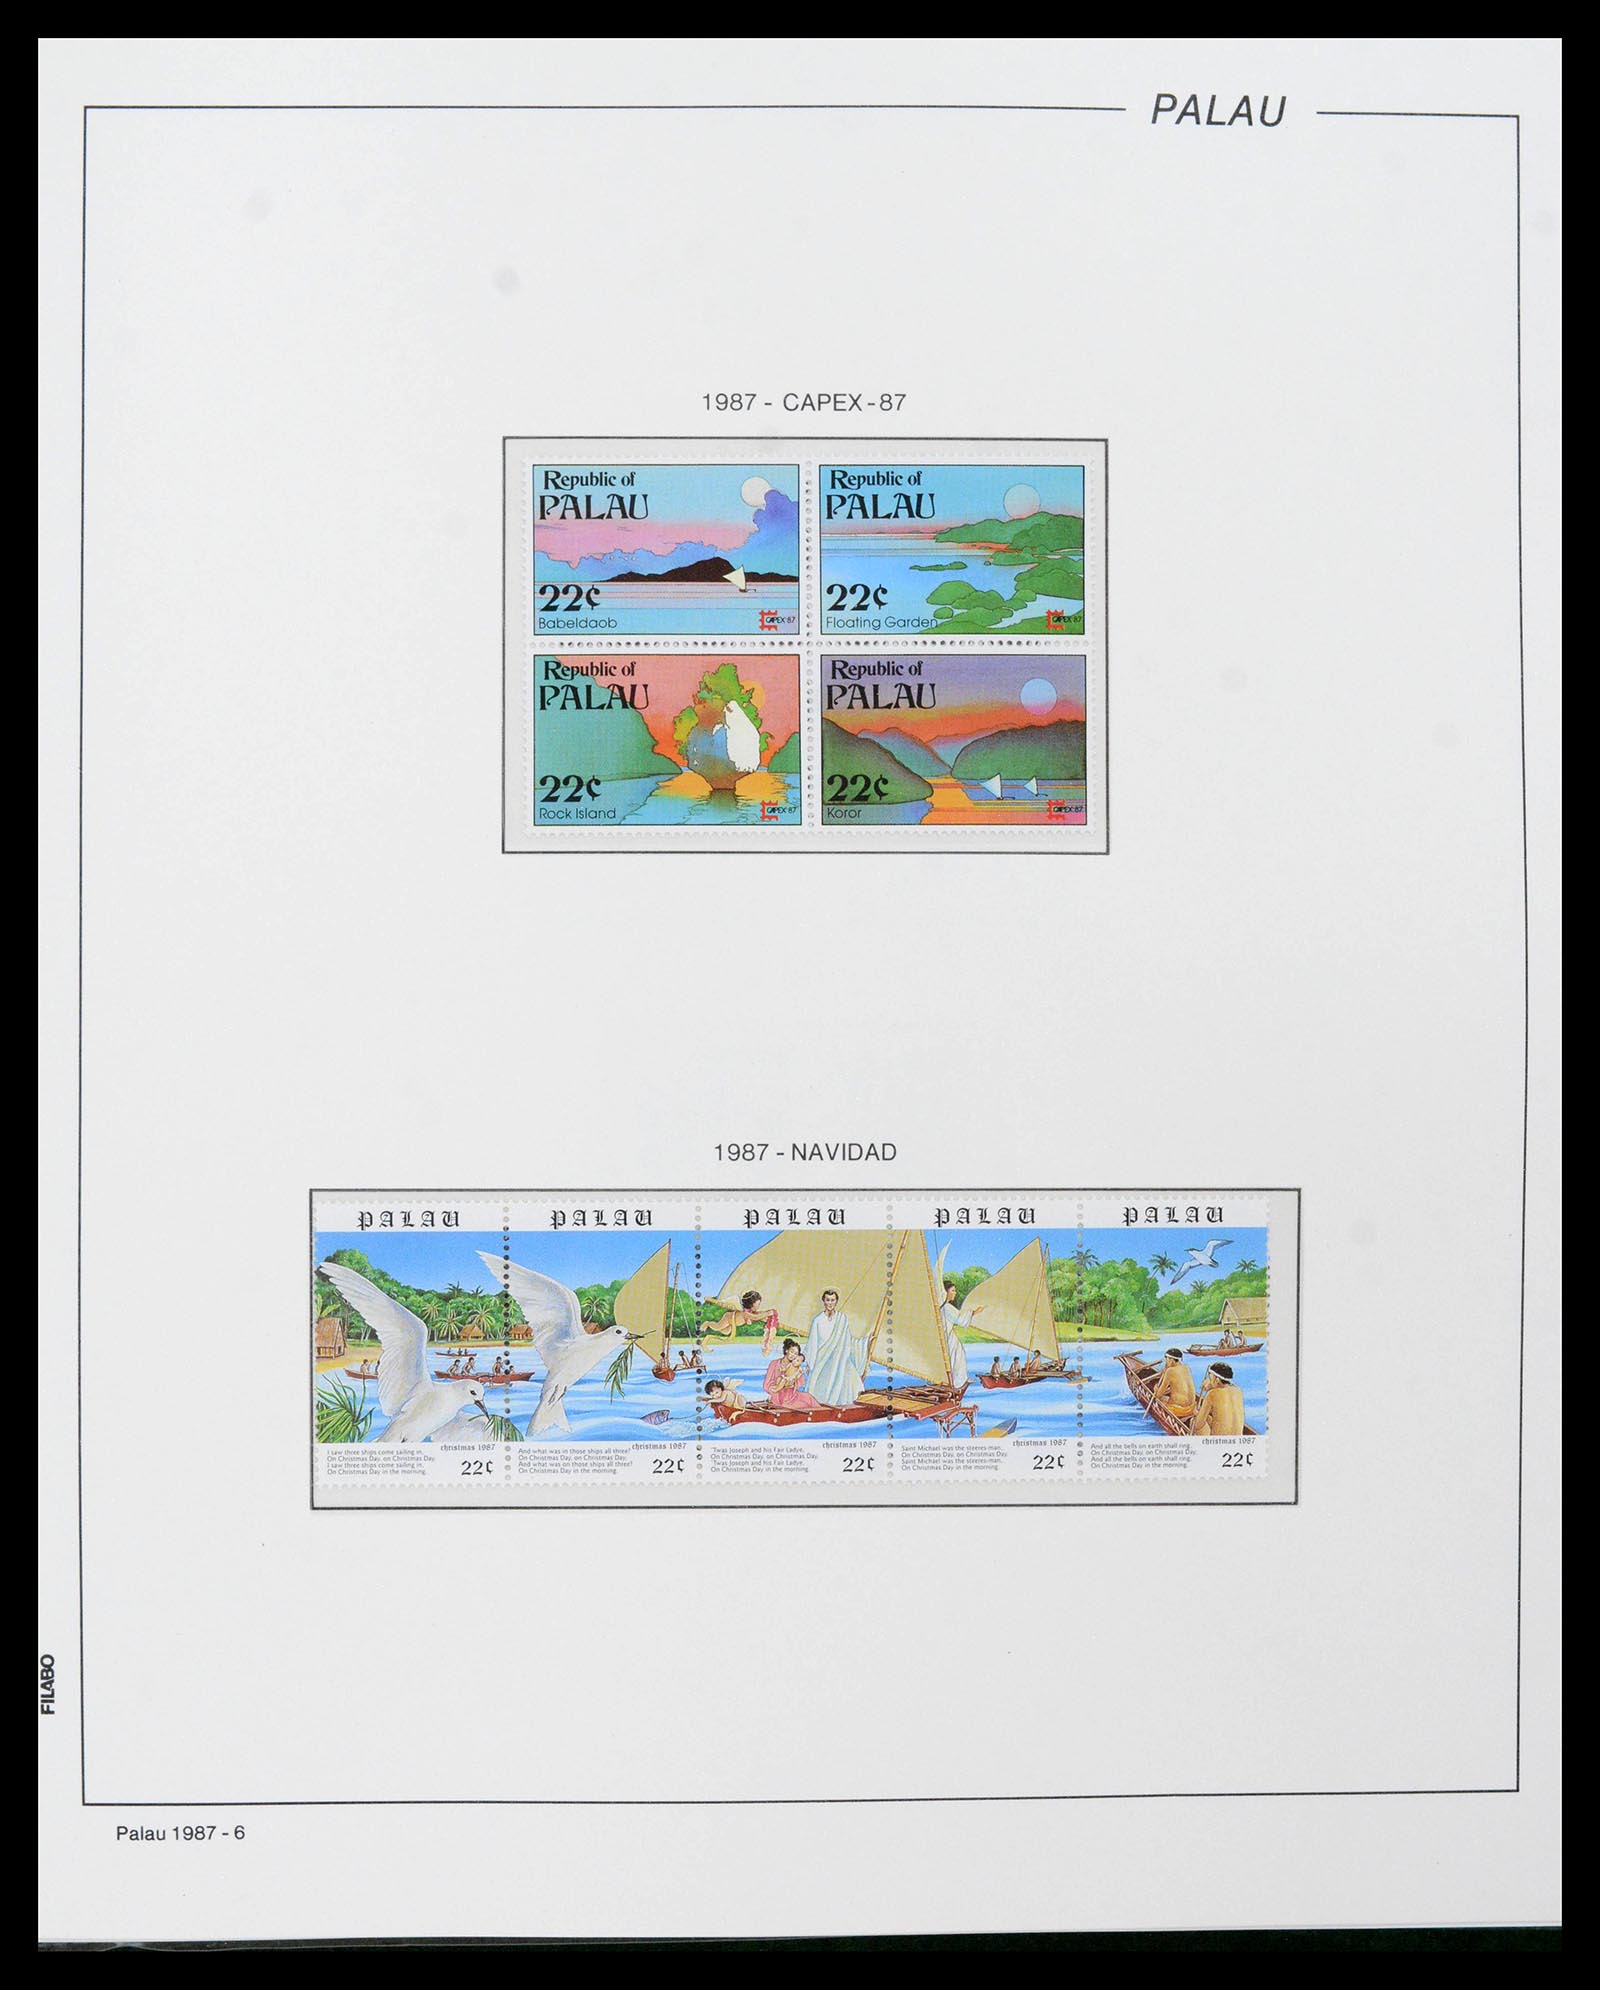 39222 0019 - Stamp collection 39222 Palau, Micronesia and Marshall islands 1980-1995.